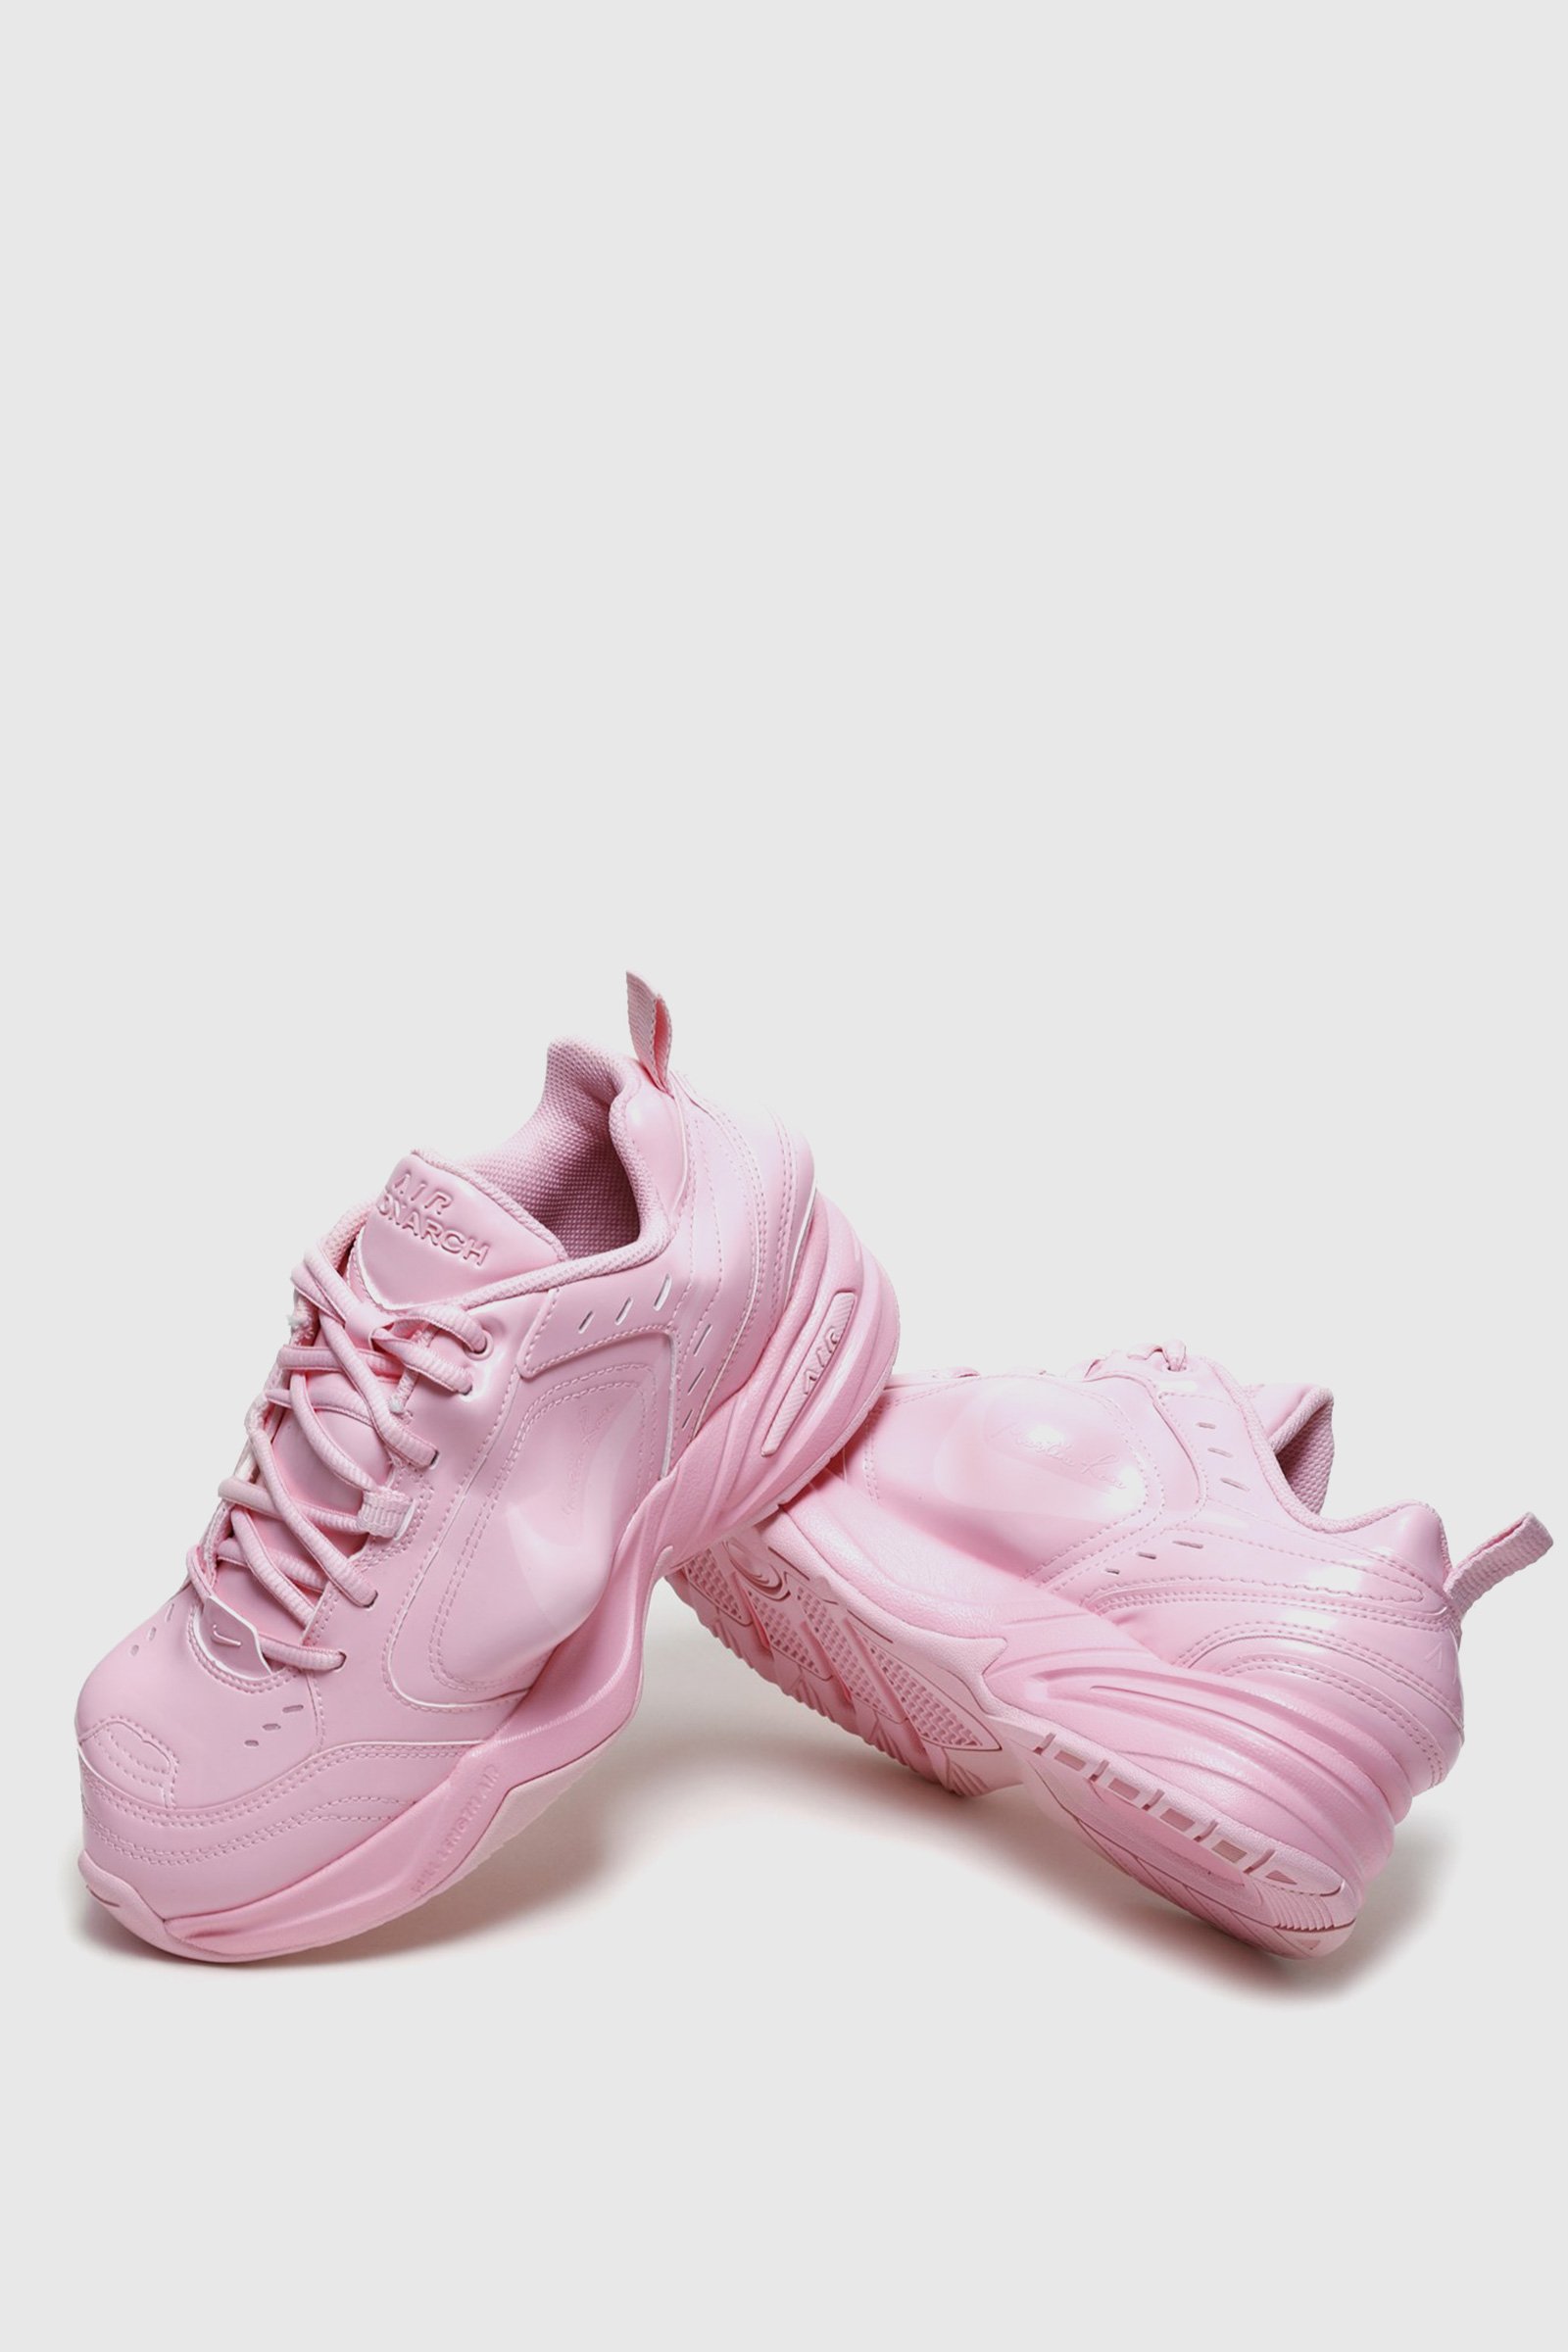 Nike Nike Martine Rose Air Monarch pink/black (600) | WoodWood.com